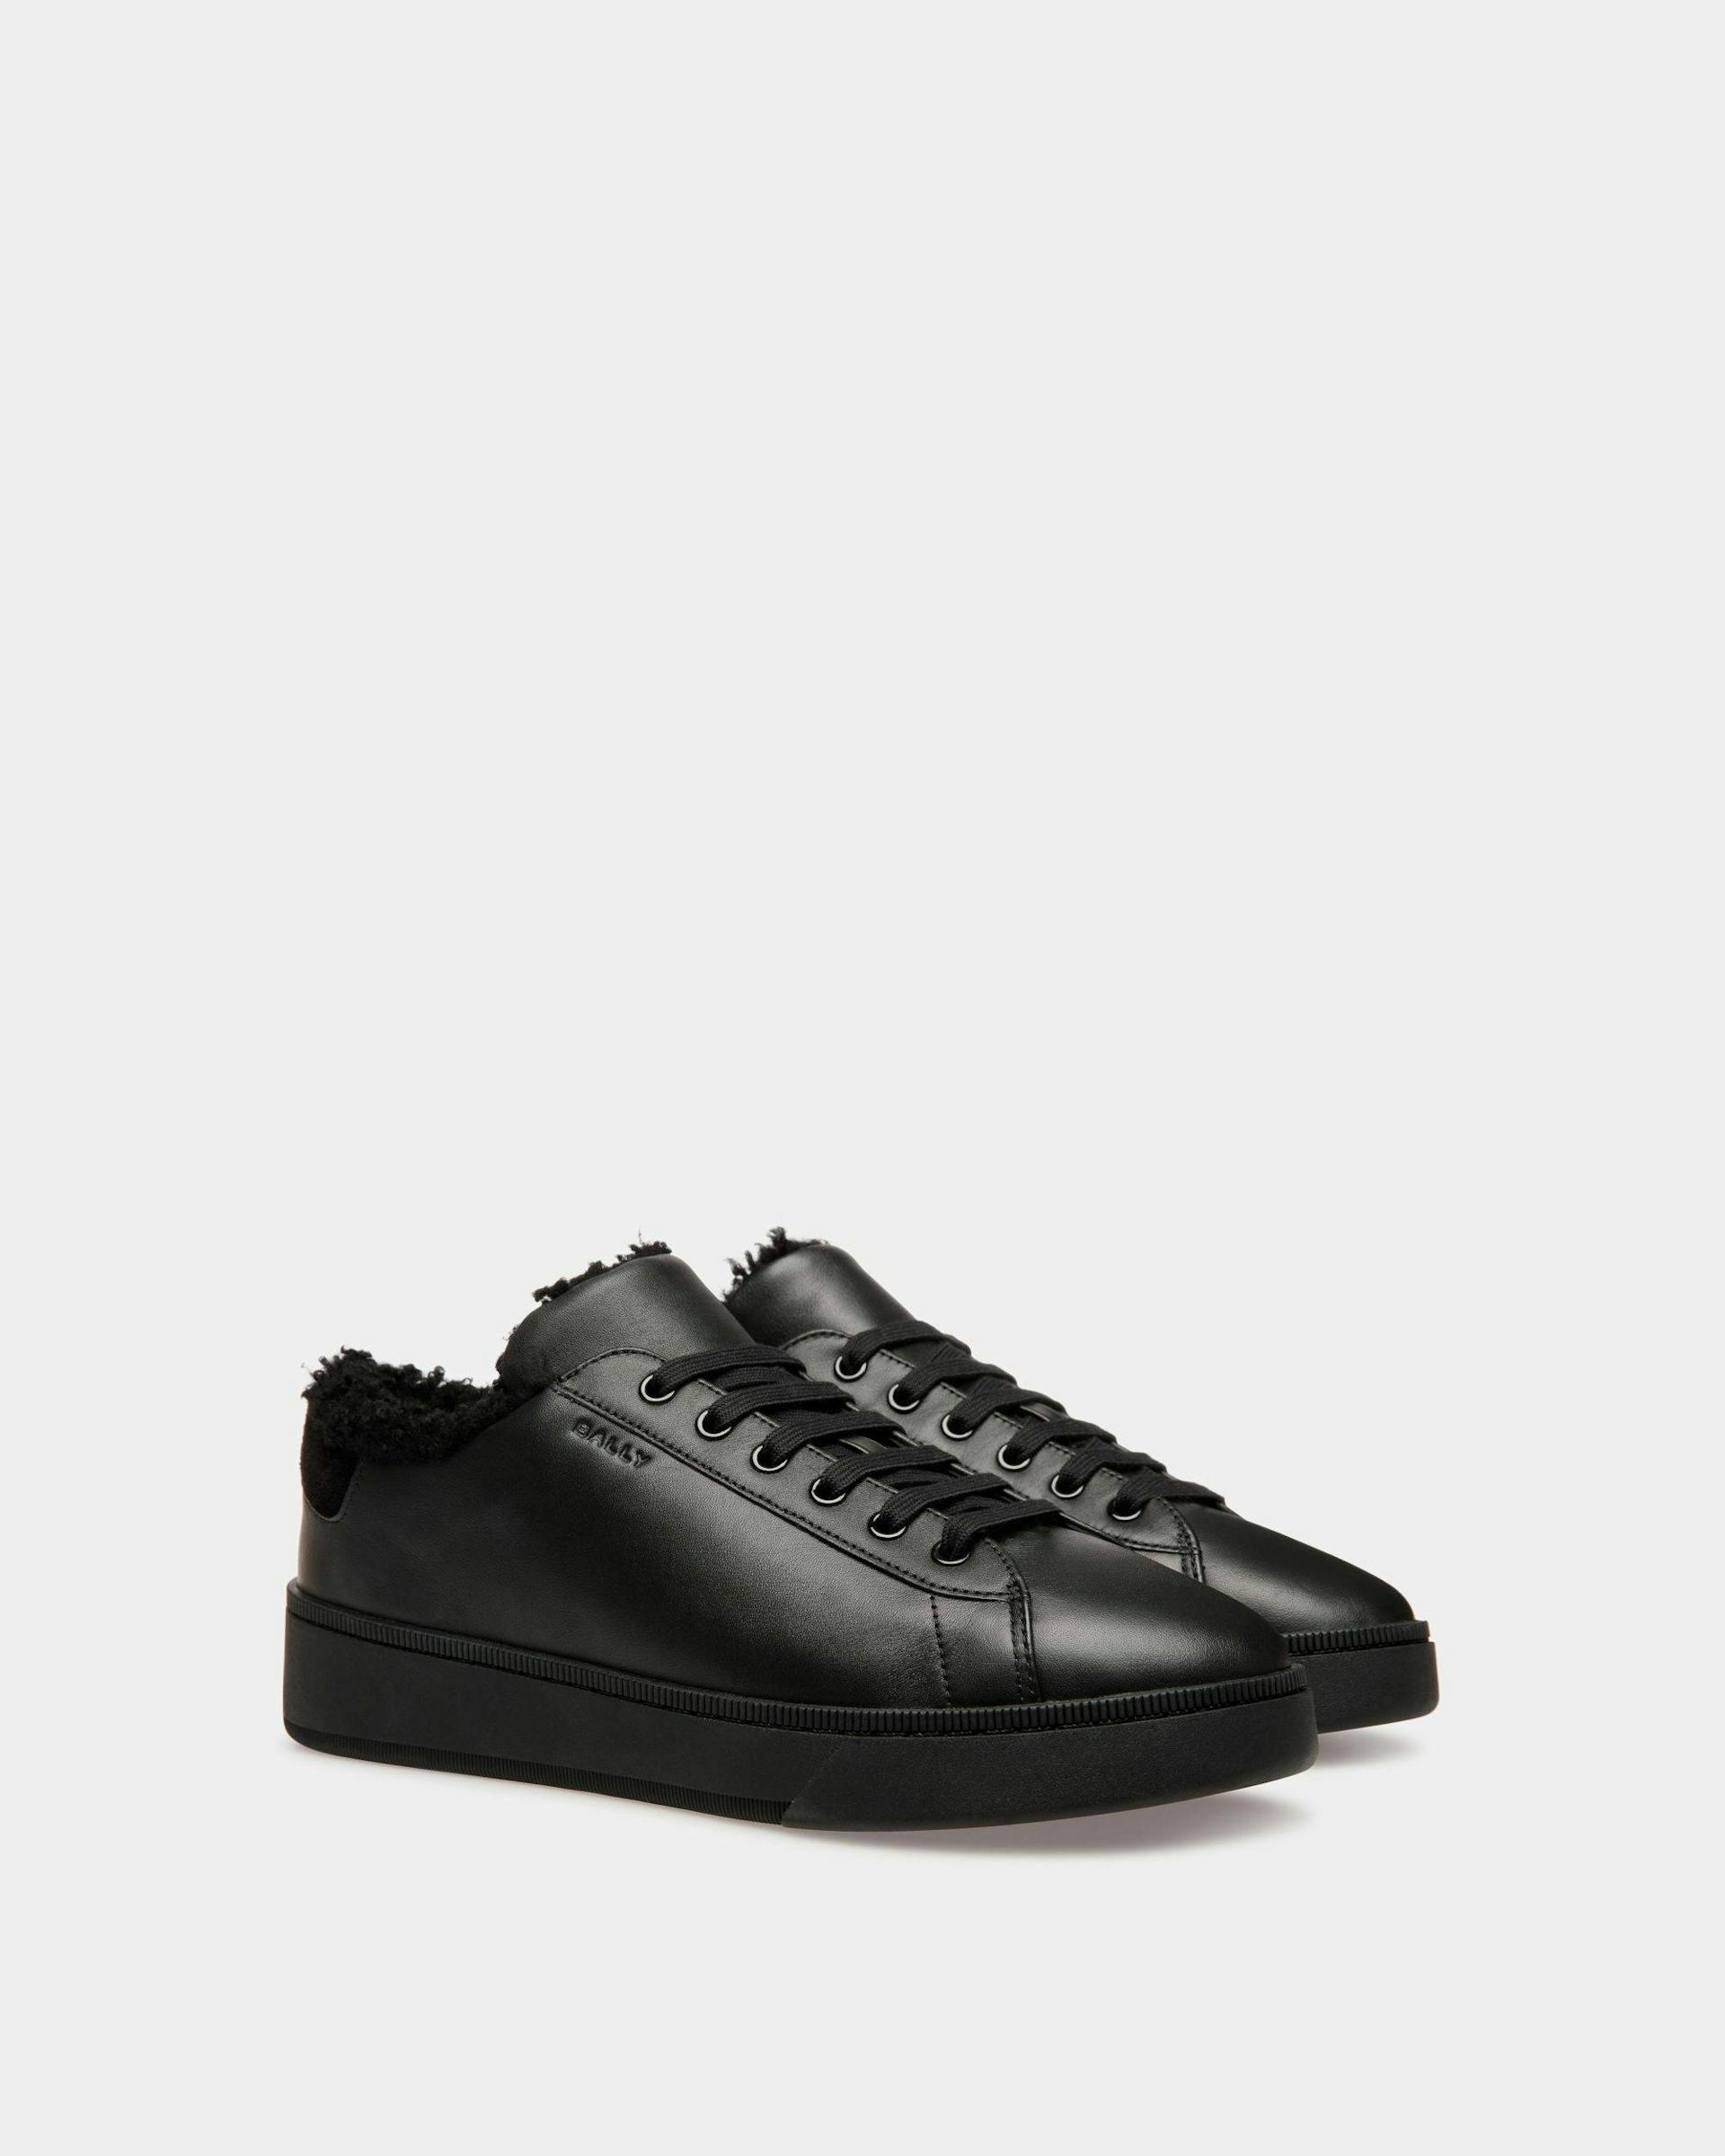 Raise Sneakers In Black Leather - Men's - Bally - 04